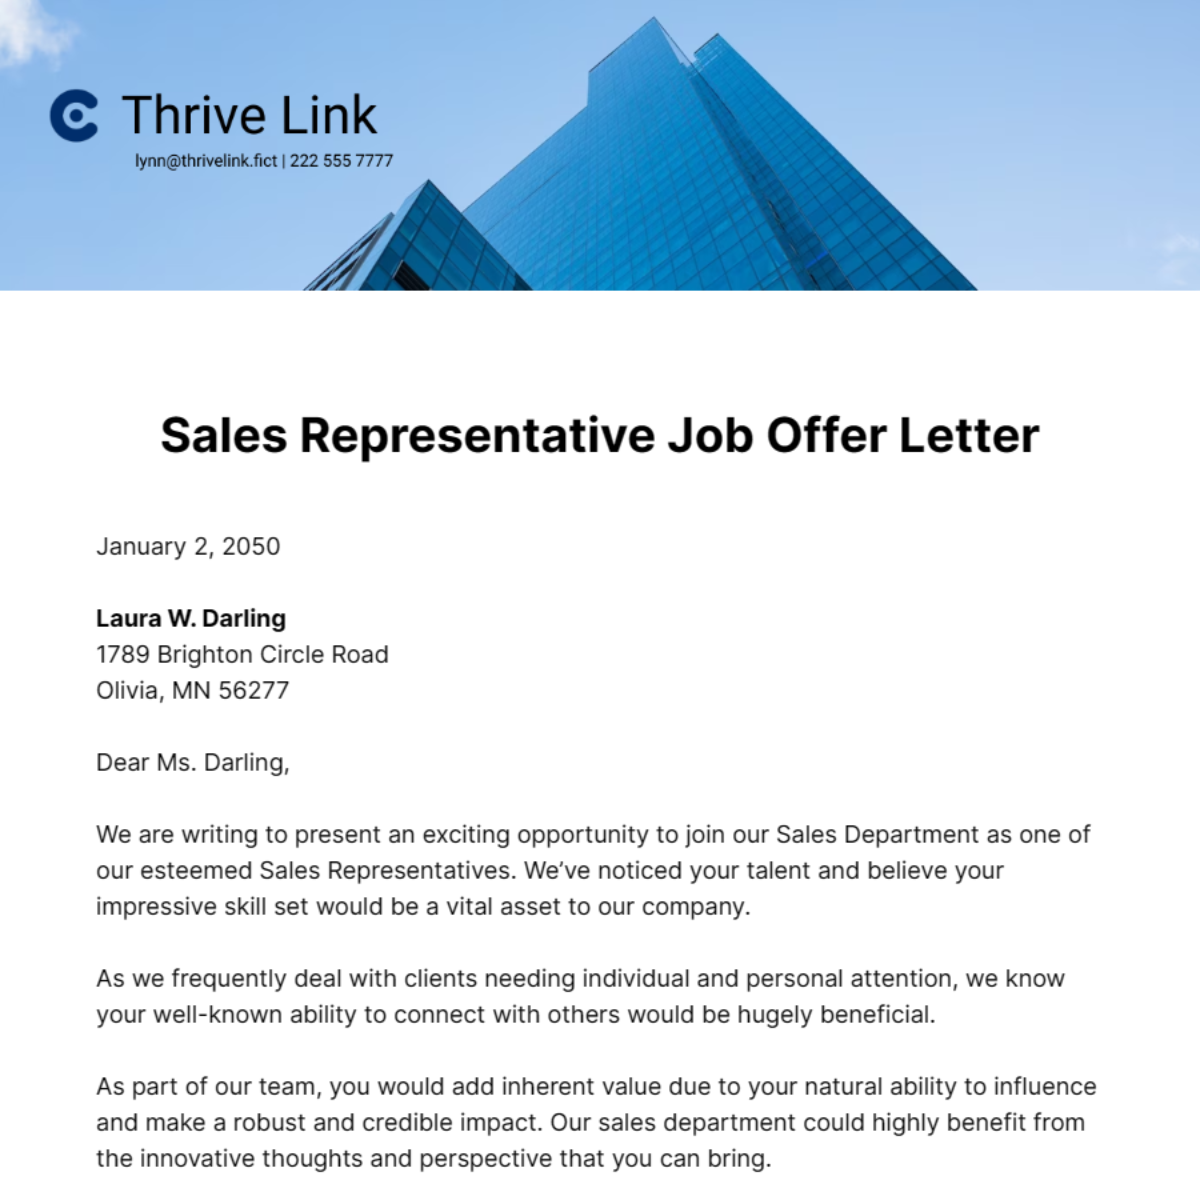 Sales Representative Job Offer Letter Template